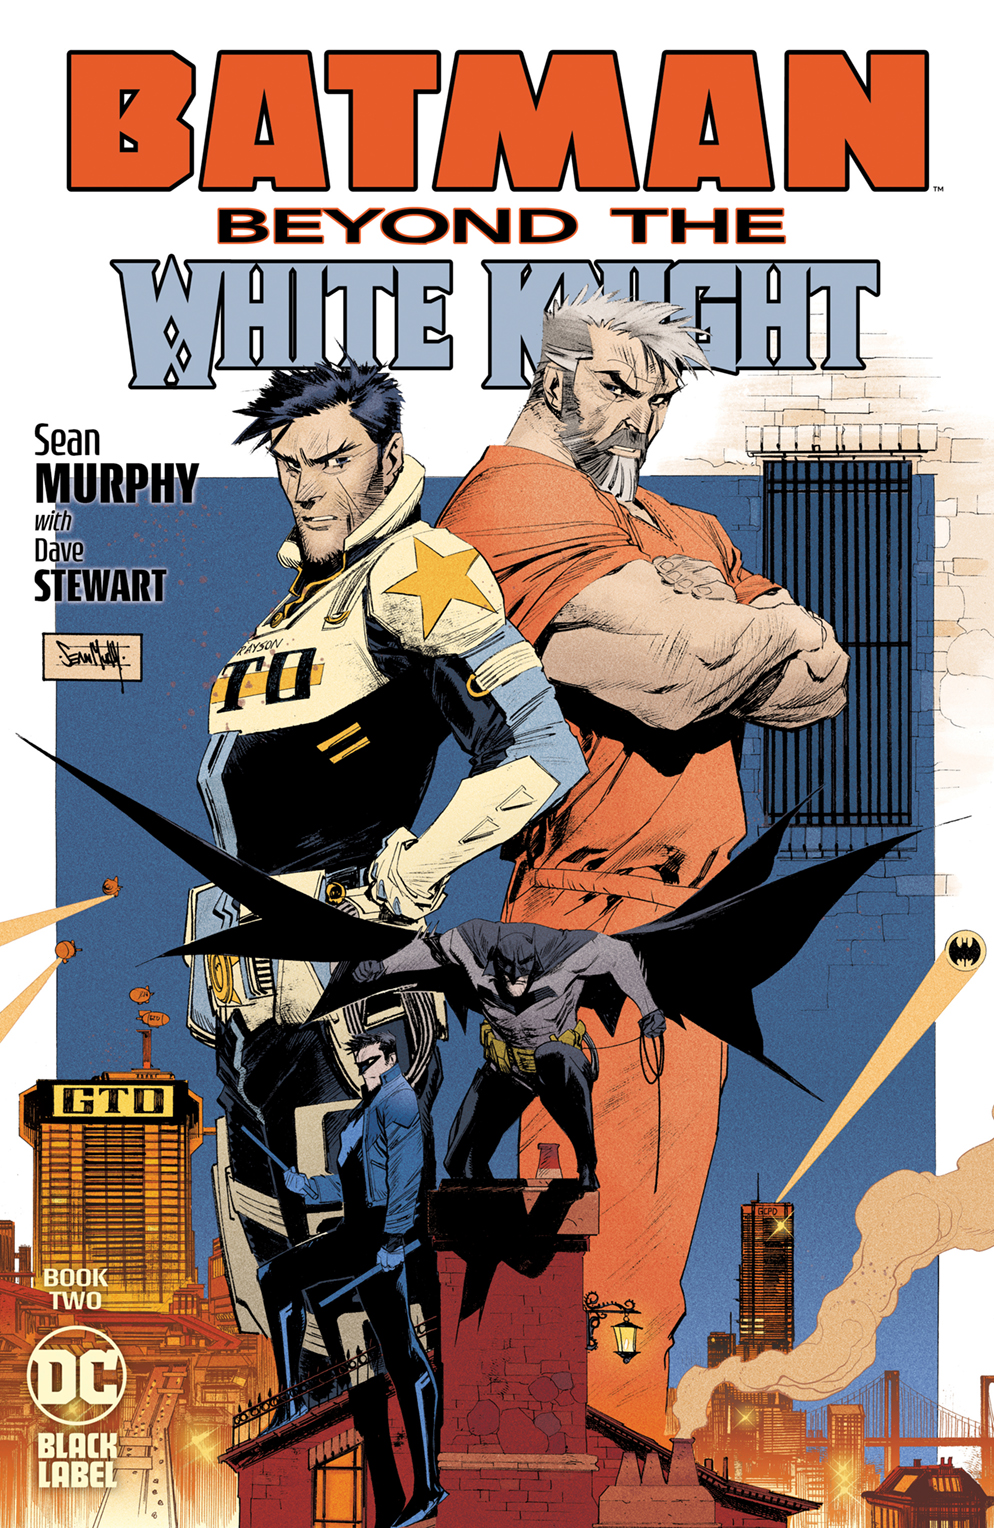 Batman Beyond The White Knight #2 Cover A Sean Murphy (Mature) (Of 8)